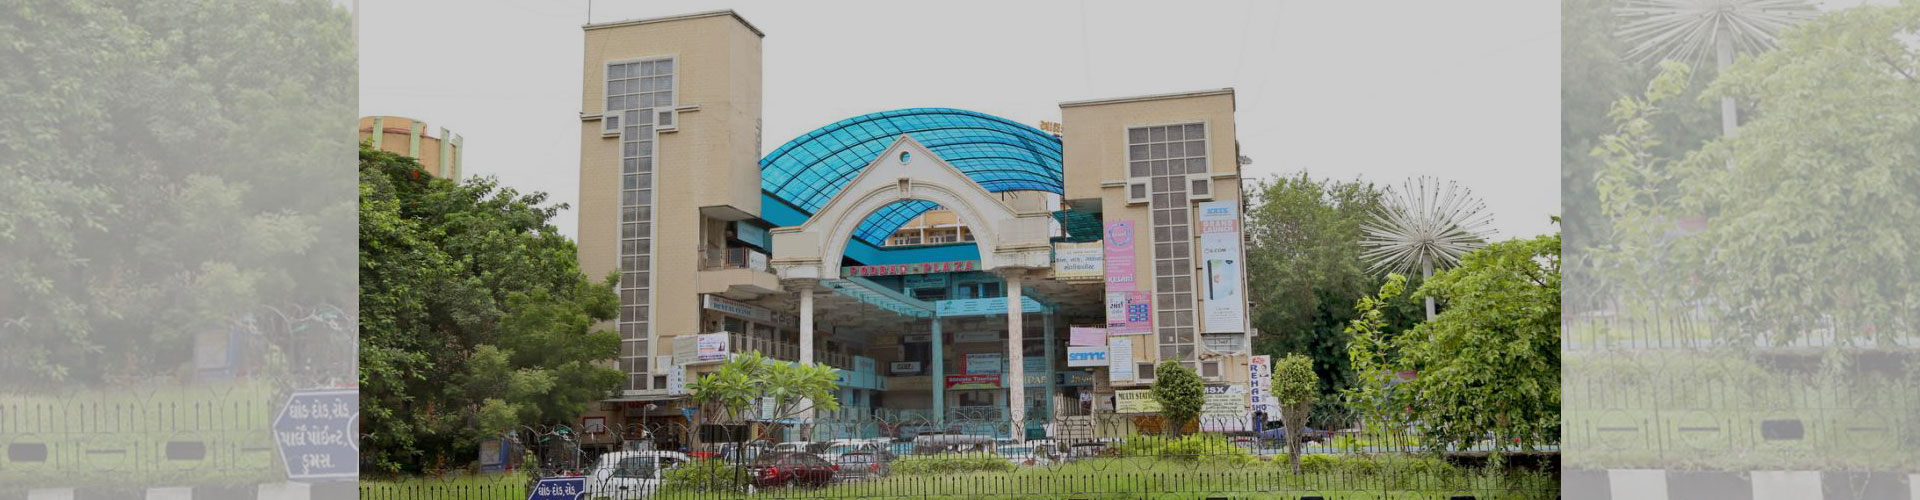 poddar plaza - shopping complex in surat